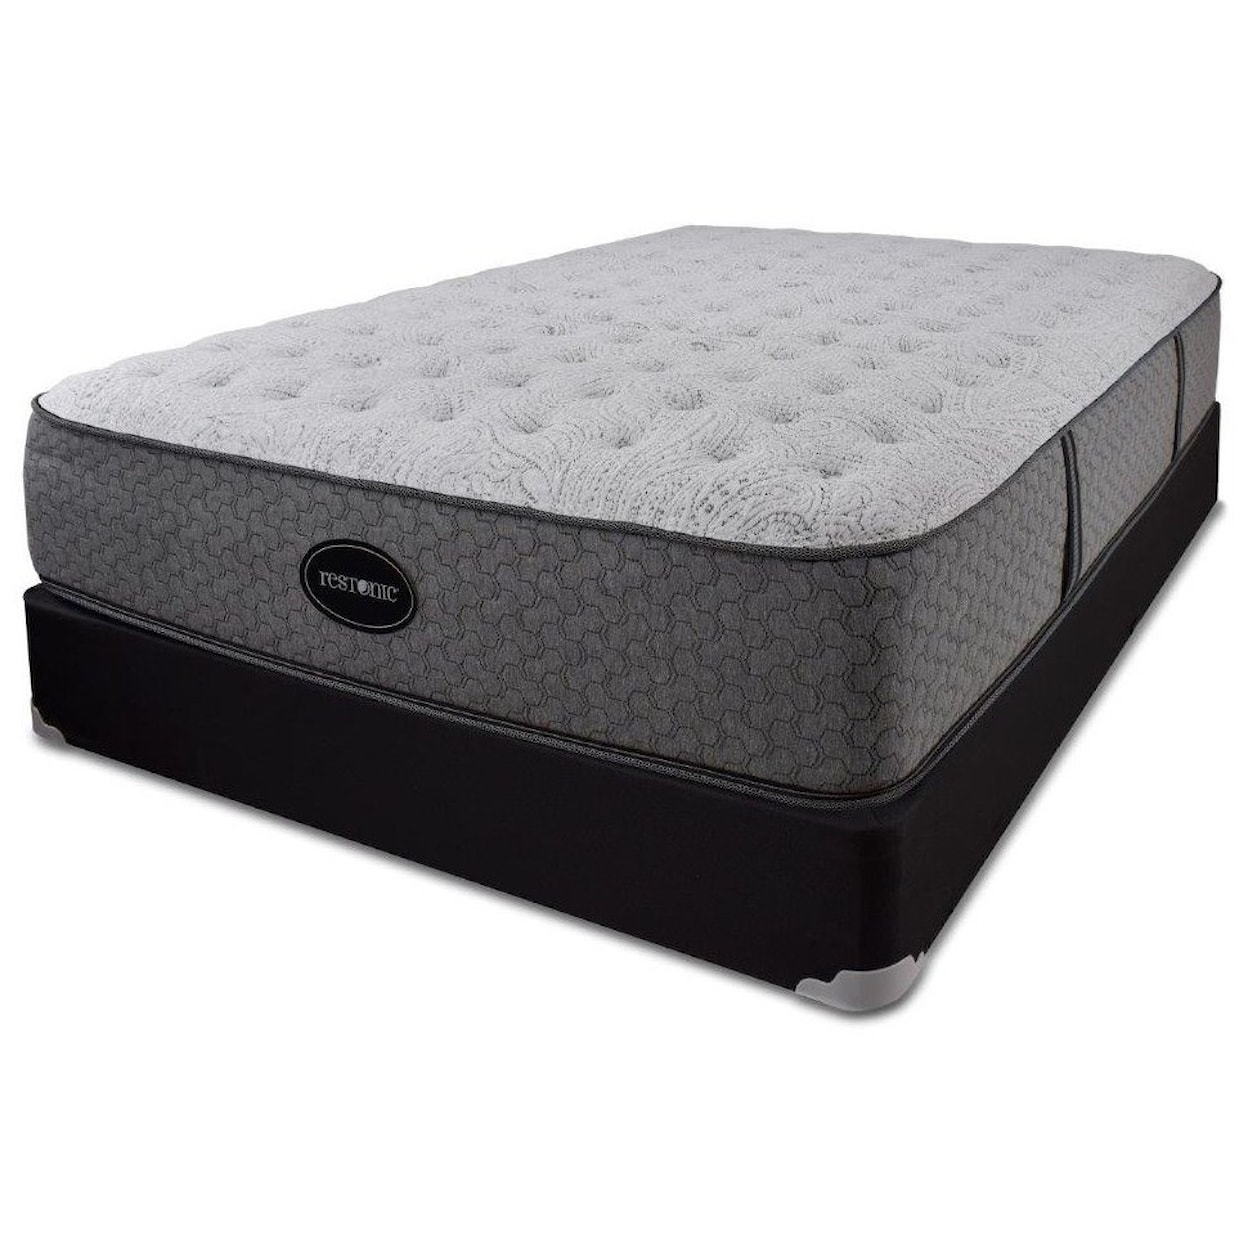 Restonic Blackcomb Cushion Firm Twin Comfort Firm Low Profile Set